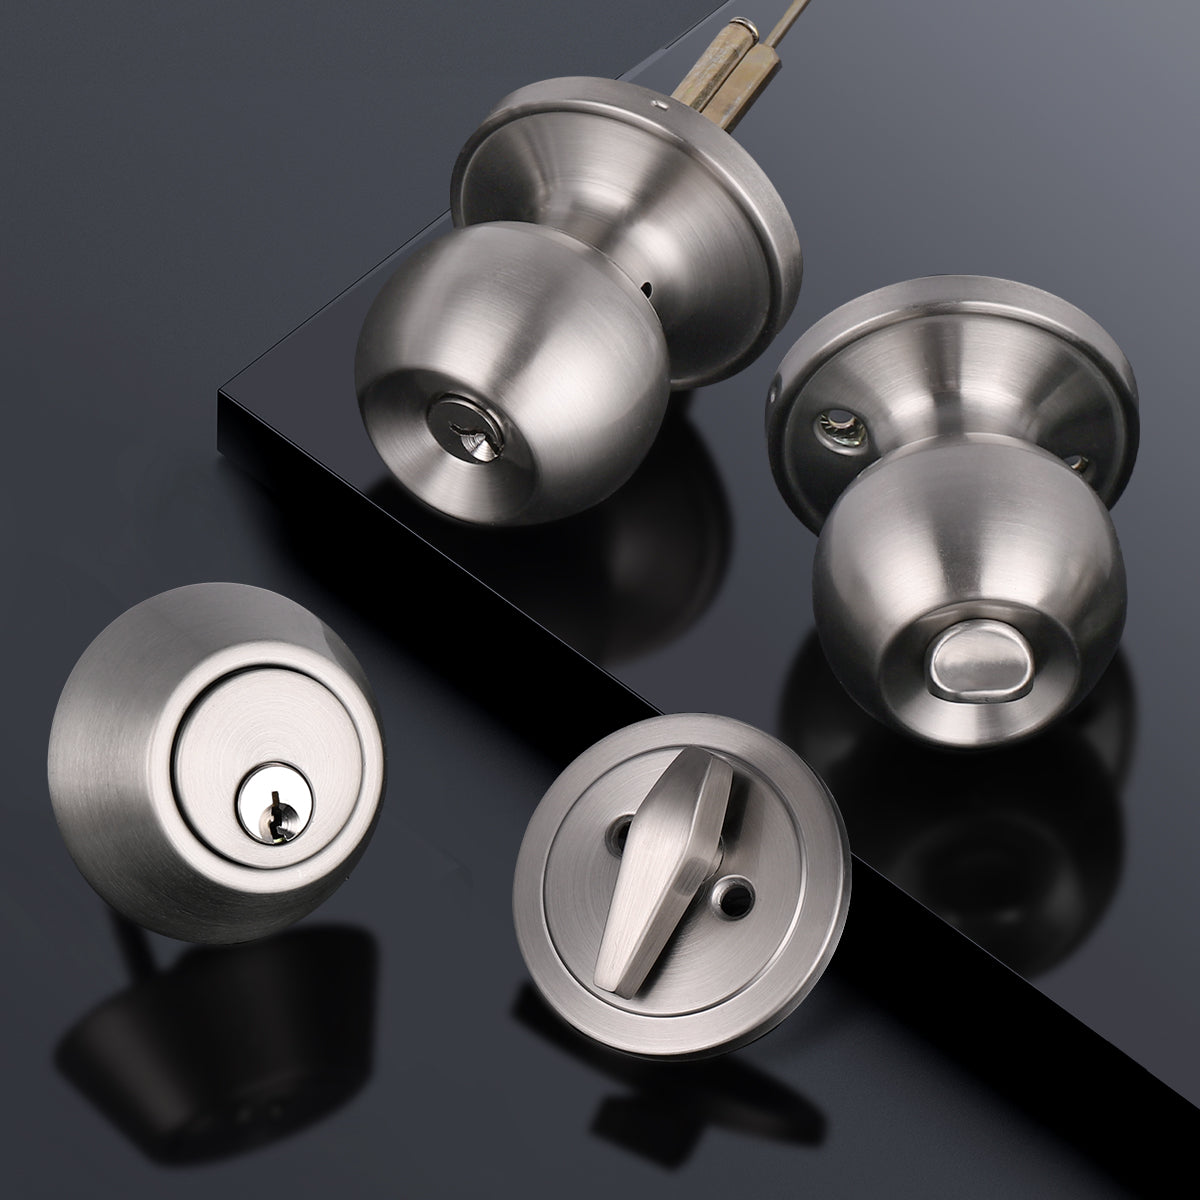 Round Ball Door Knob Lock with Single Cylinder Deadbolt Entry Keyed Lockset Satin Nickel Finish - Keyed Alike DL607ET-101SN - Probrico